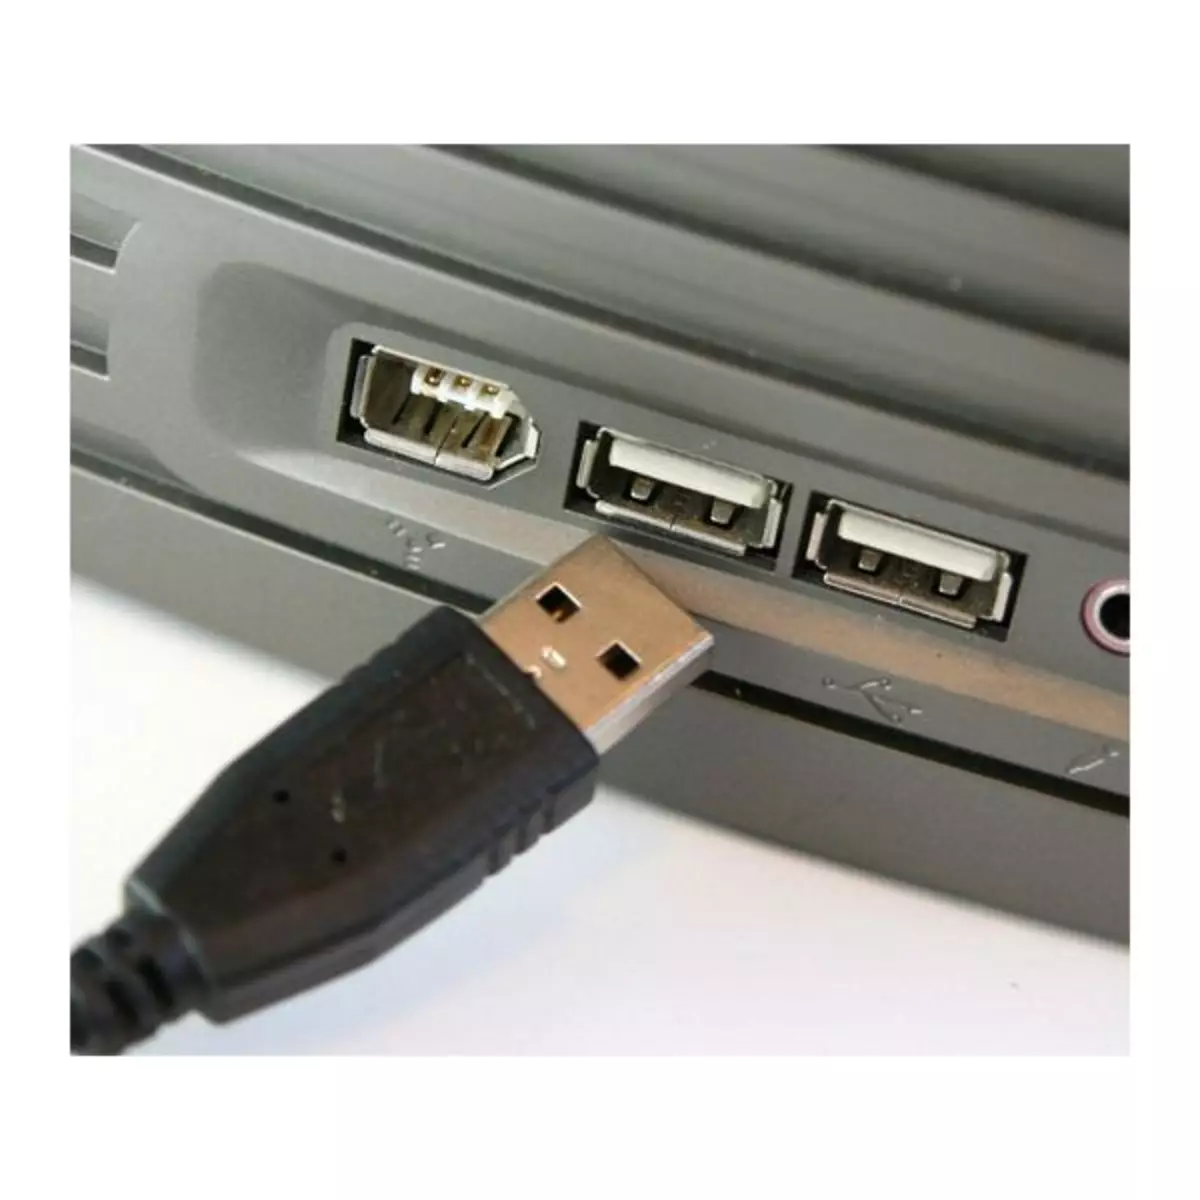 Download Driver USB Ports Samsung